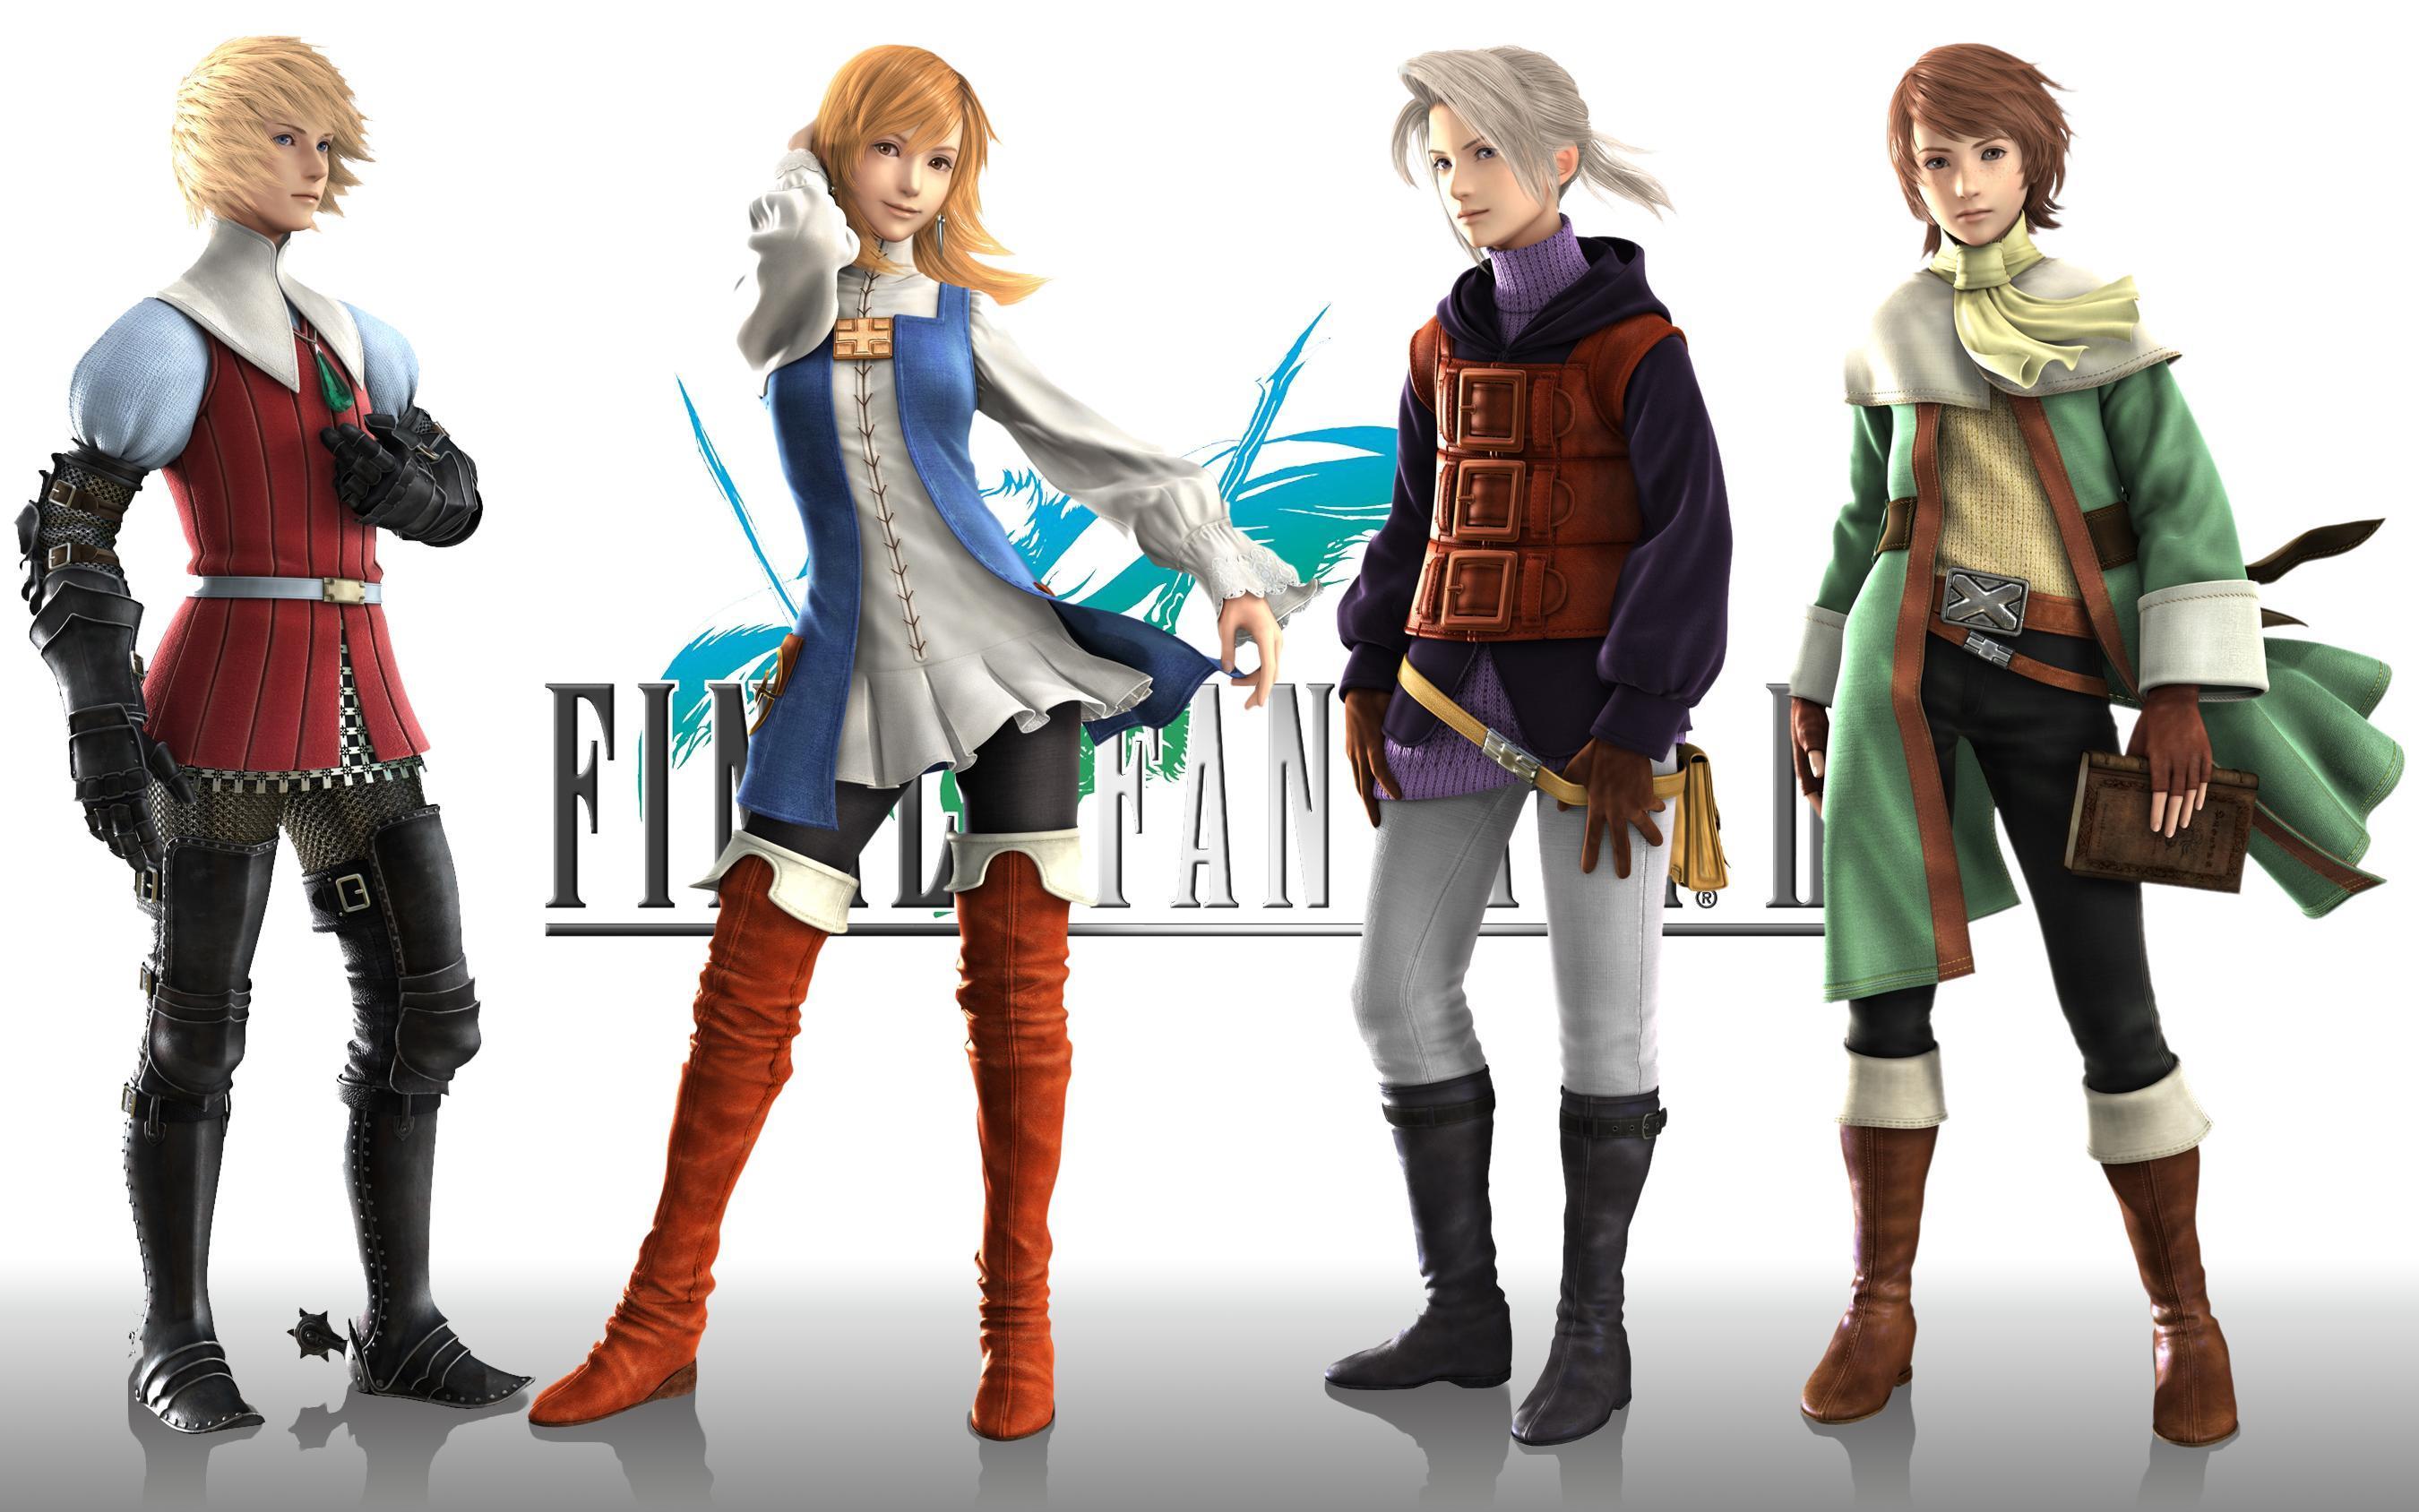 image For > Final Fantasy 3 Arc